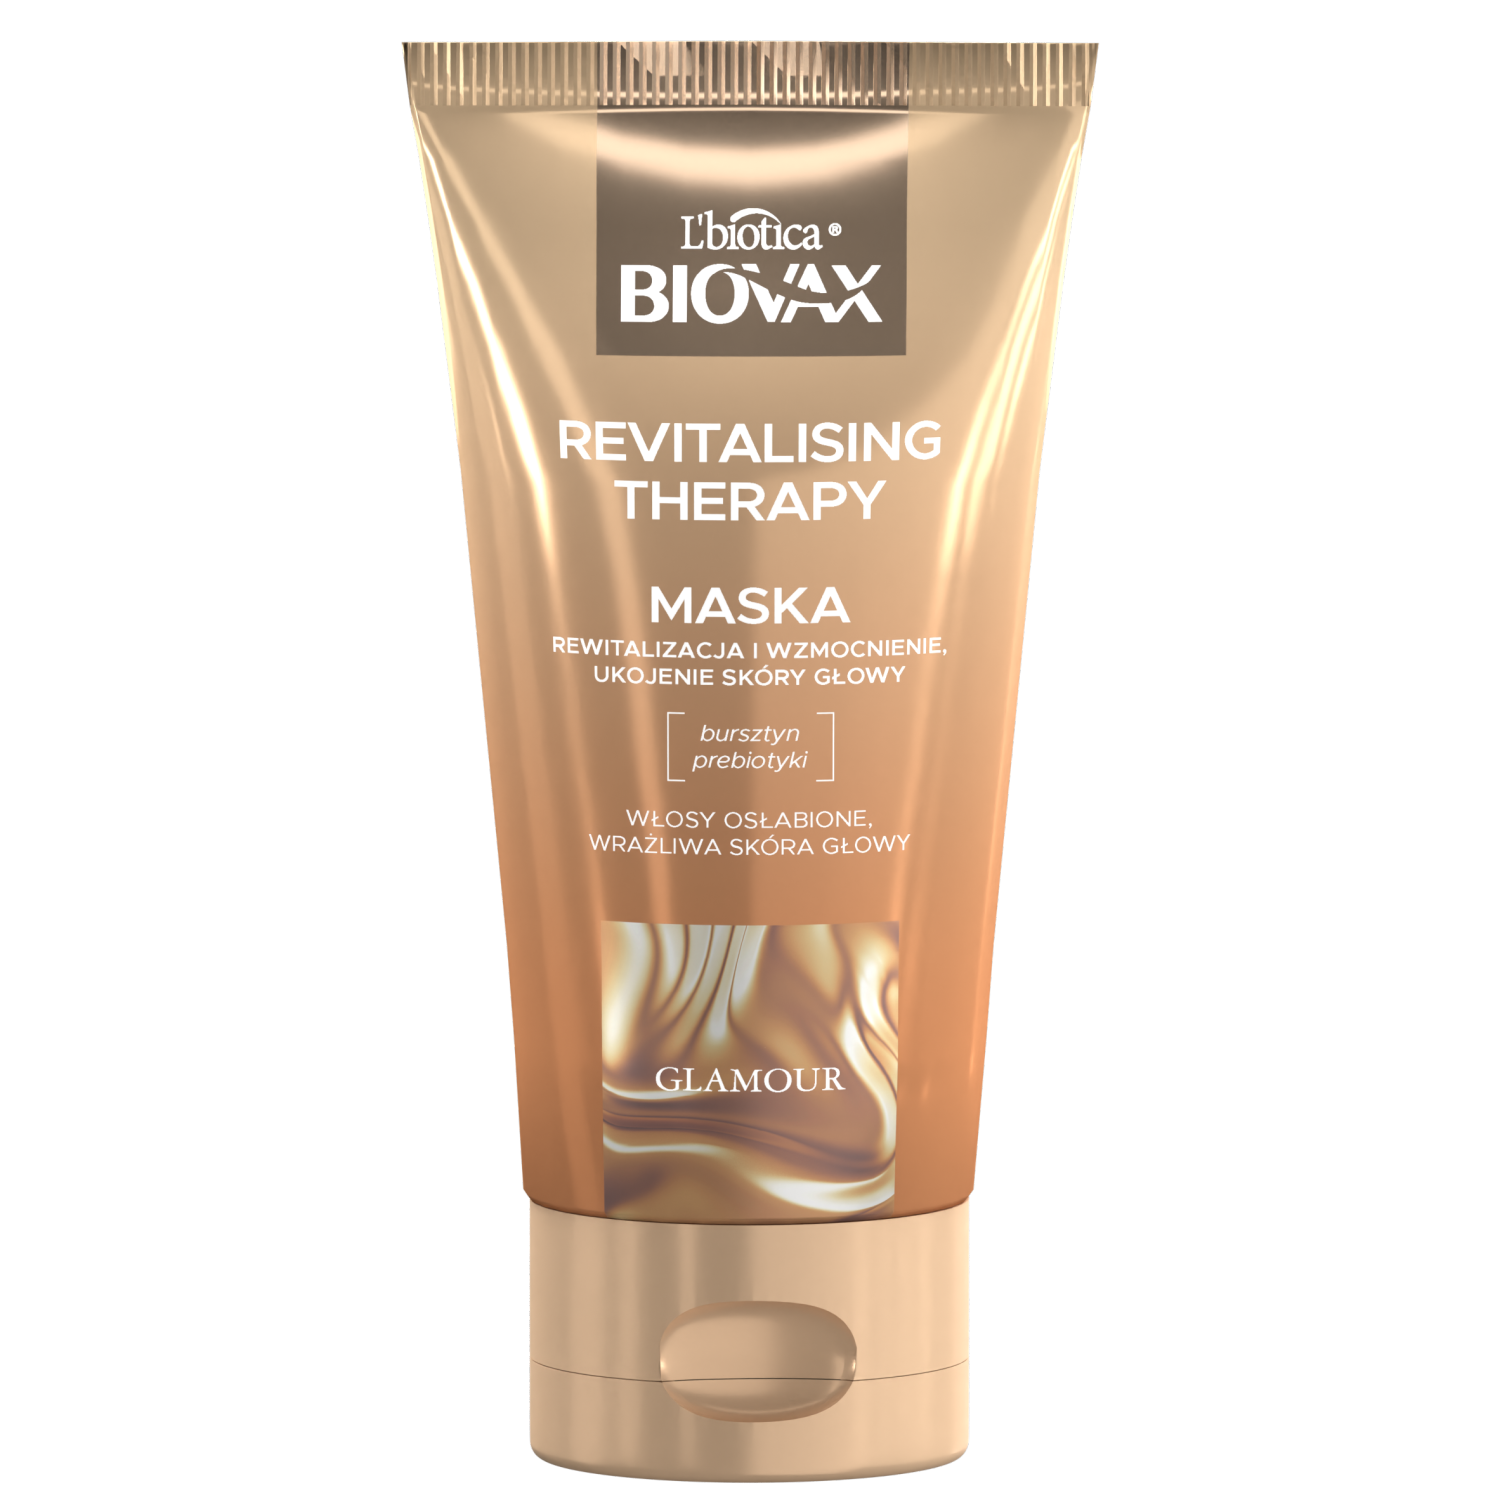 Укрепляющая маска для волос Biovax Glamour Revitalising Therapy, 150 мл